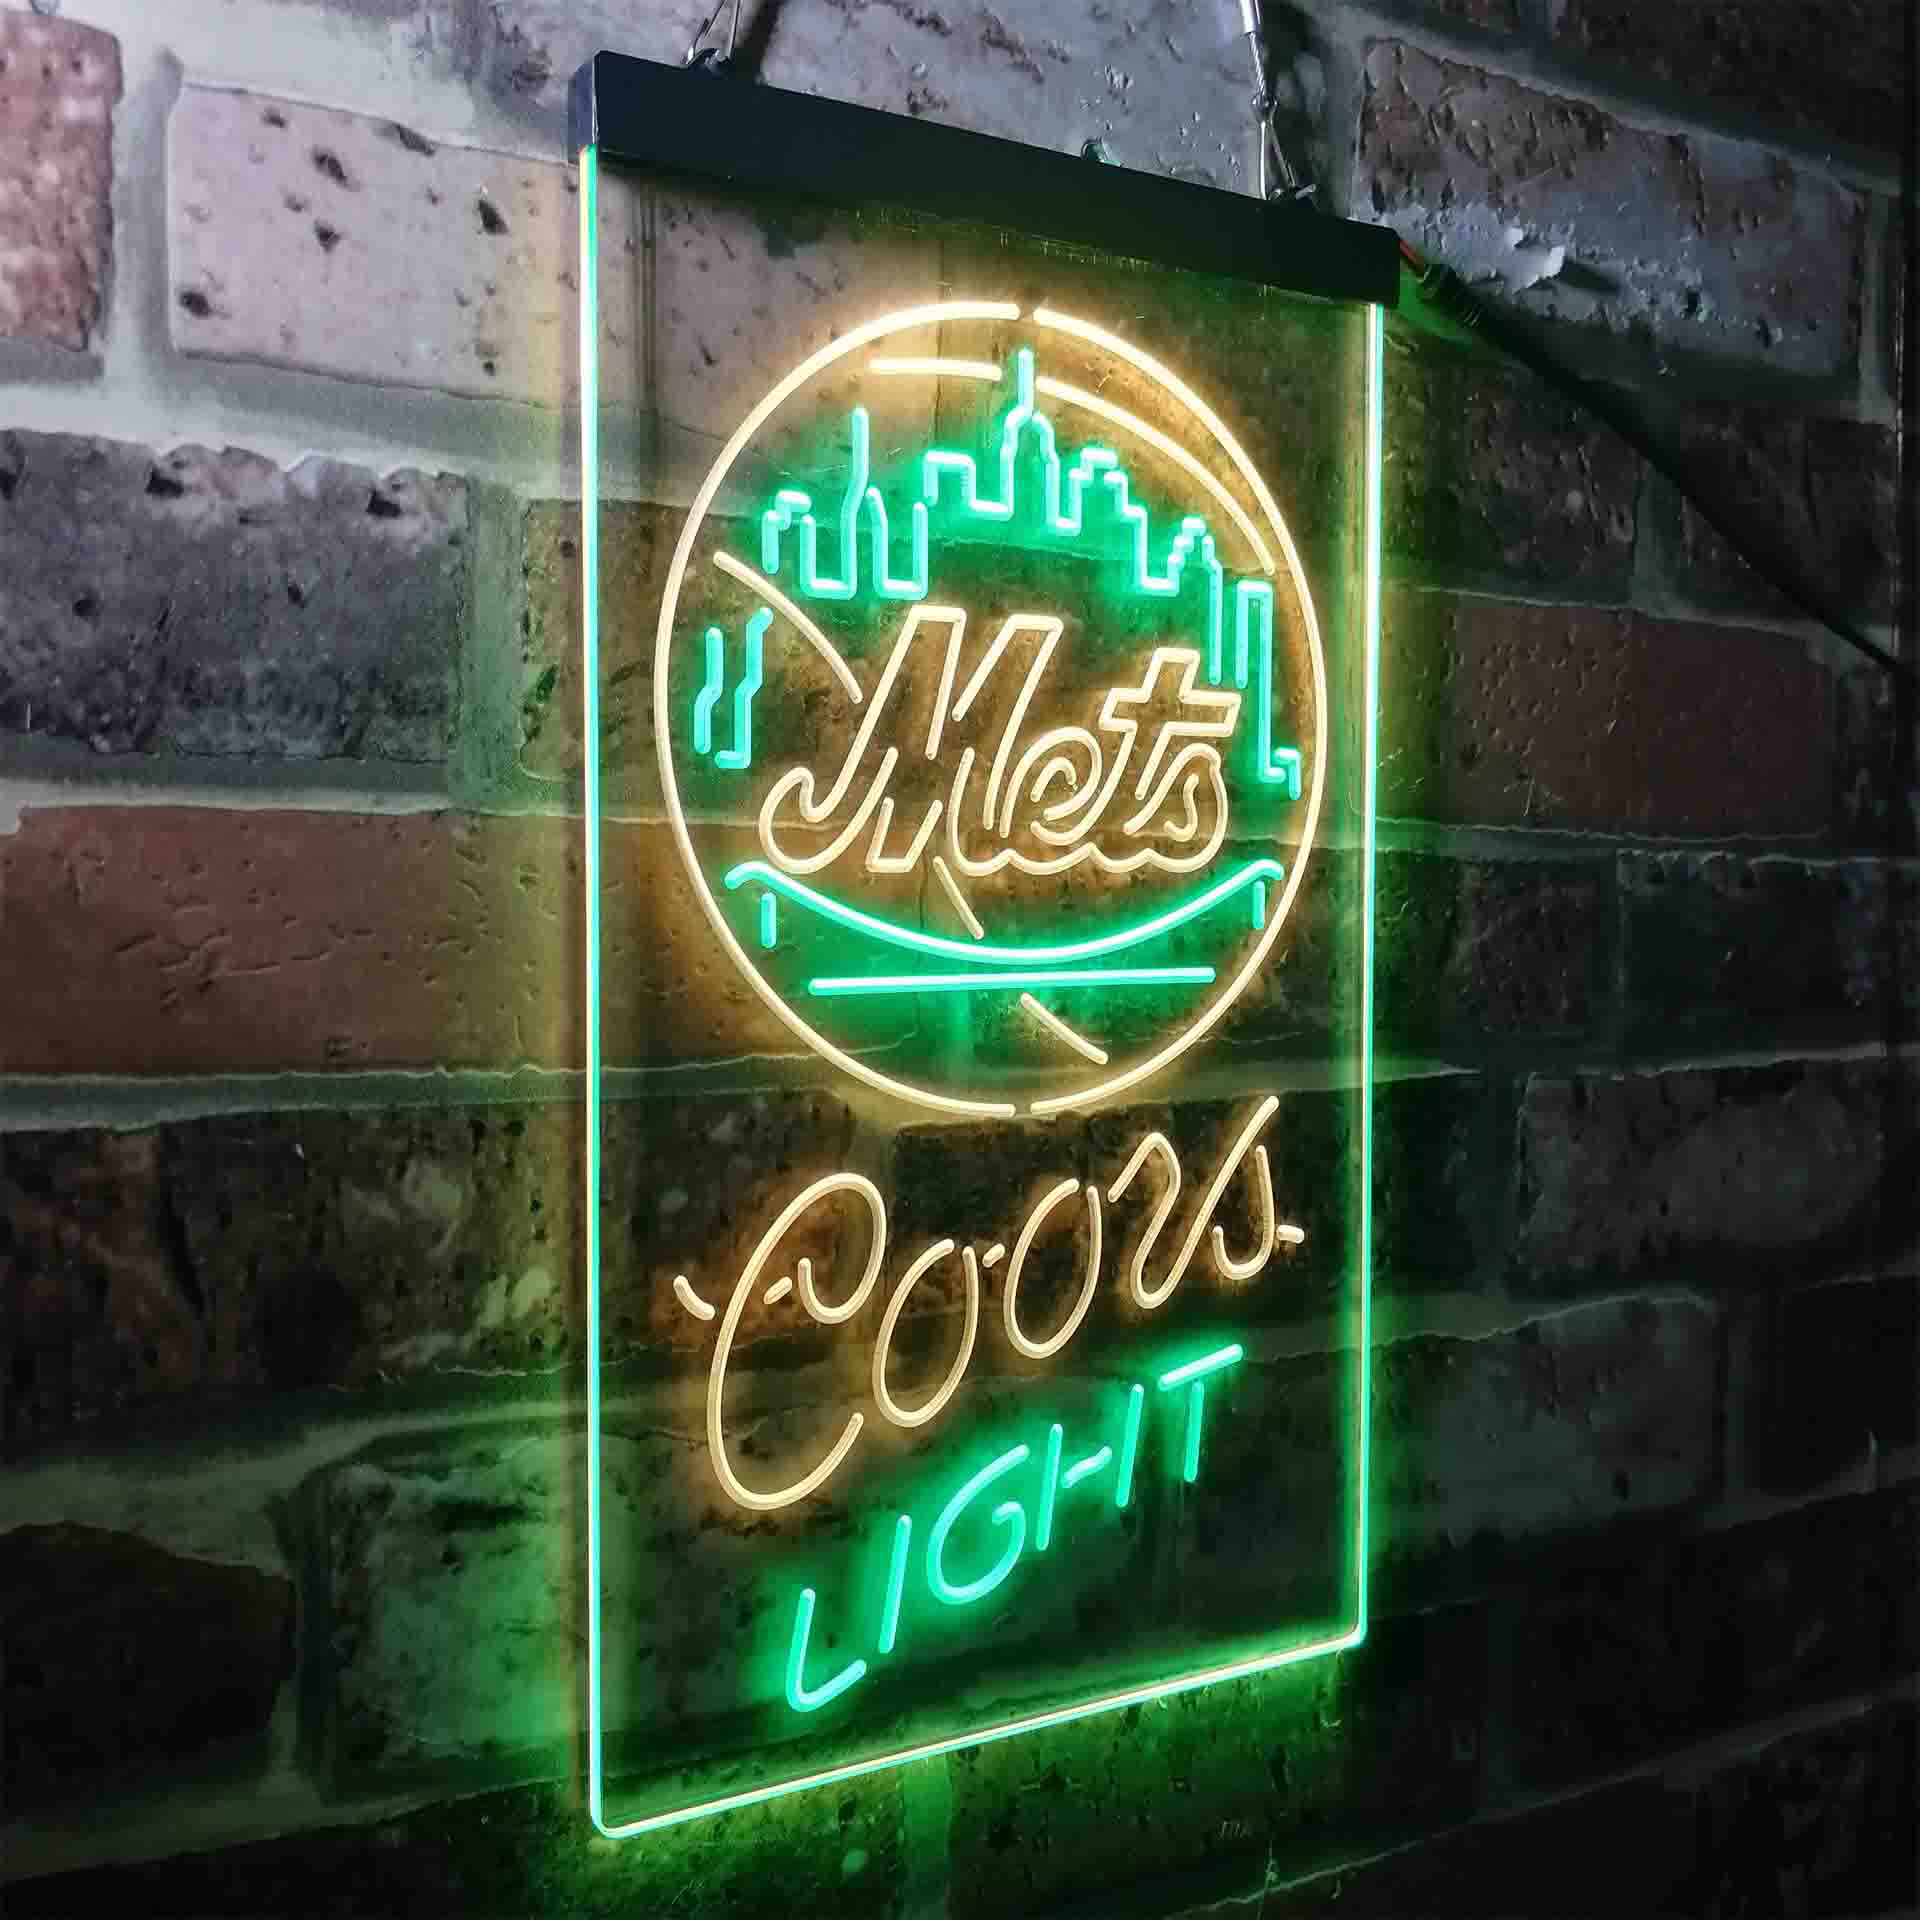 New York Mets Coors Light Neon-Like LED Sign